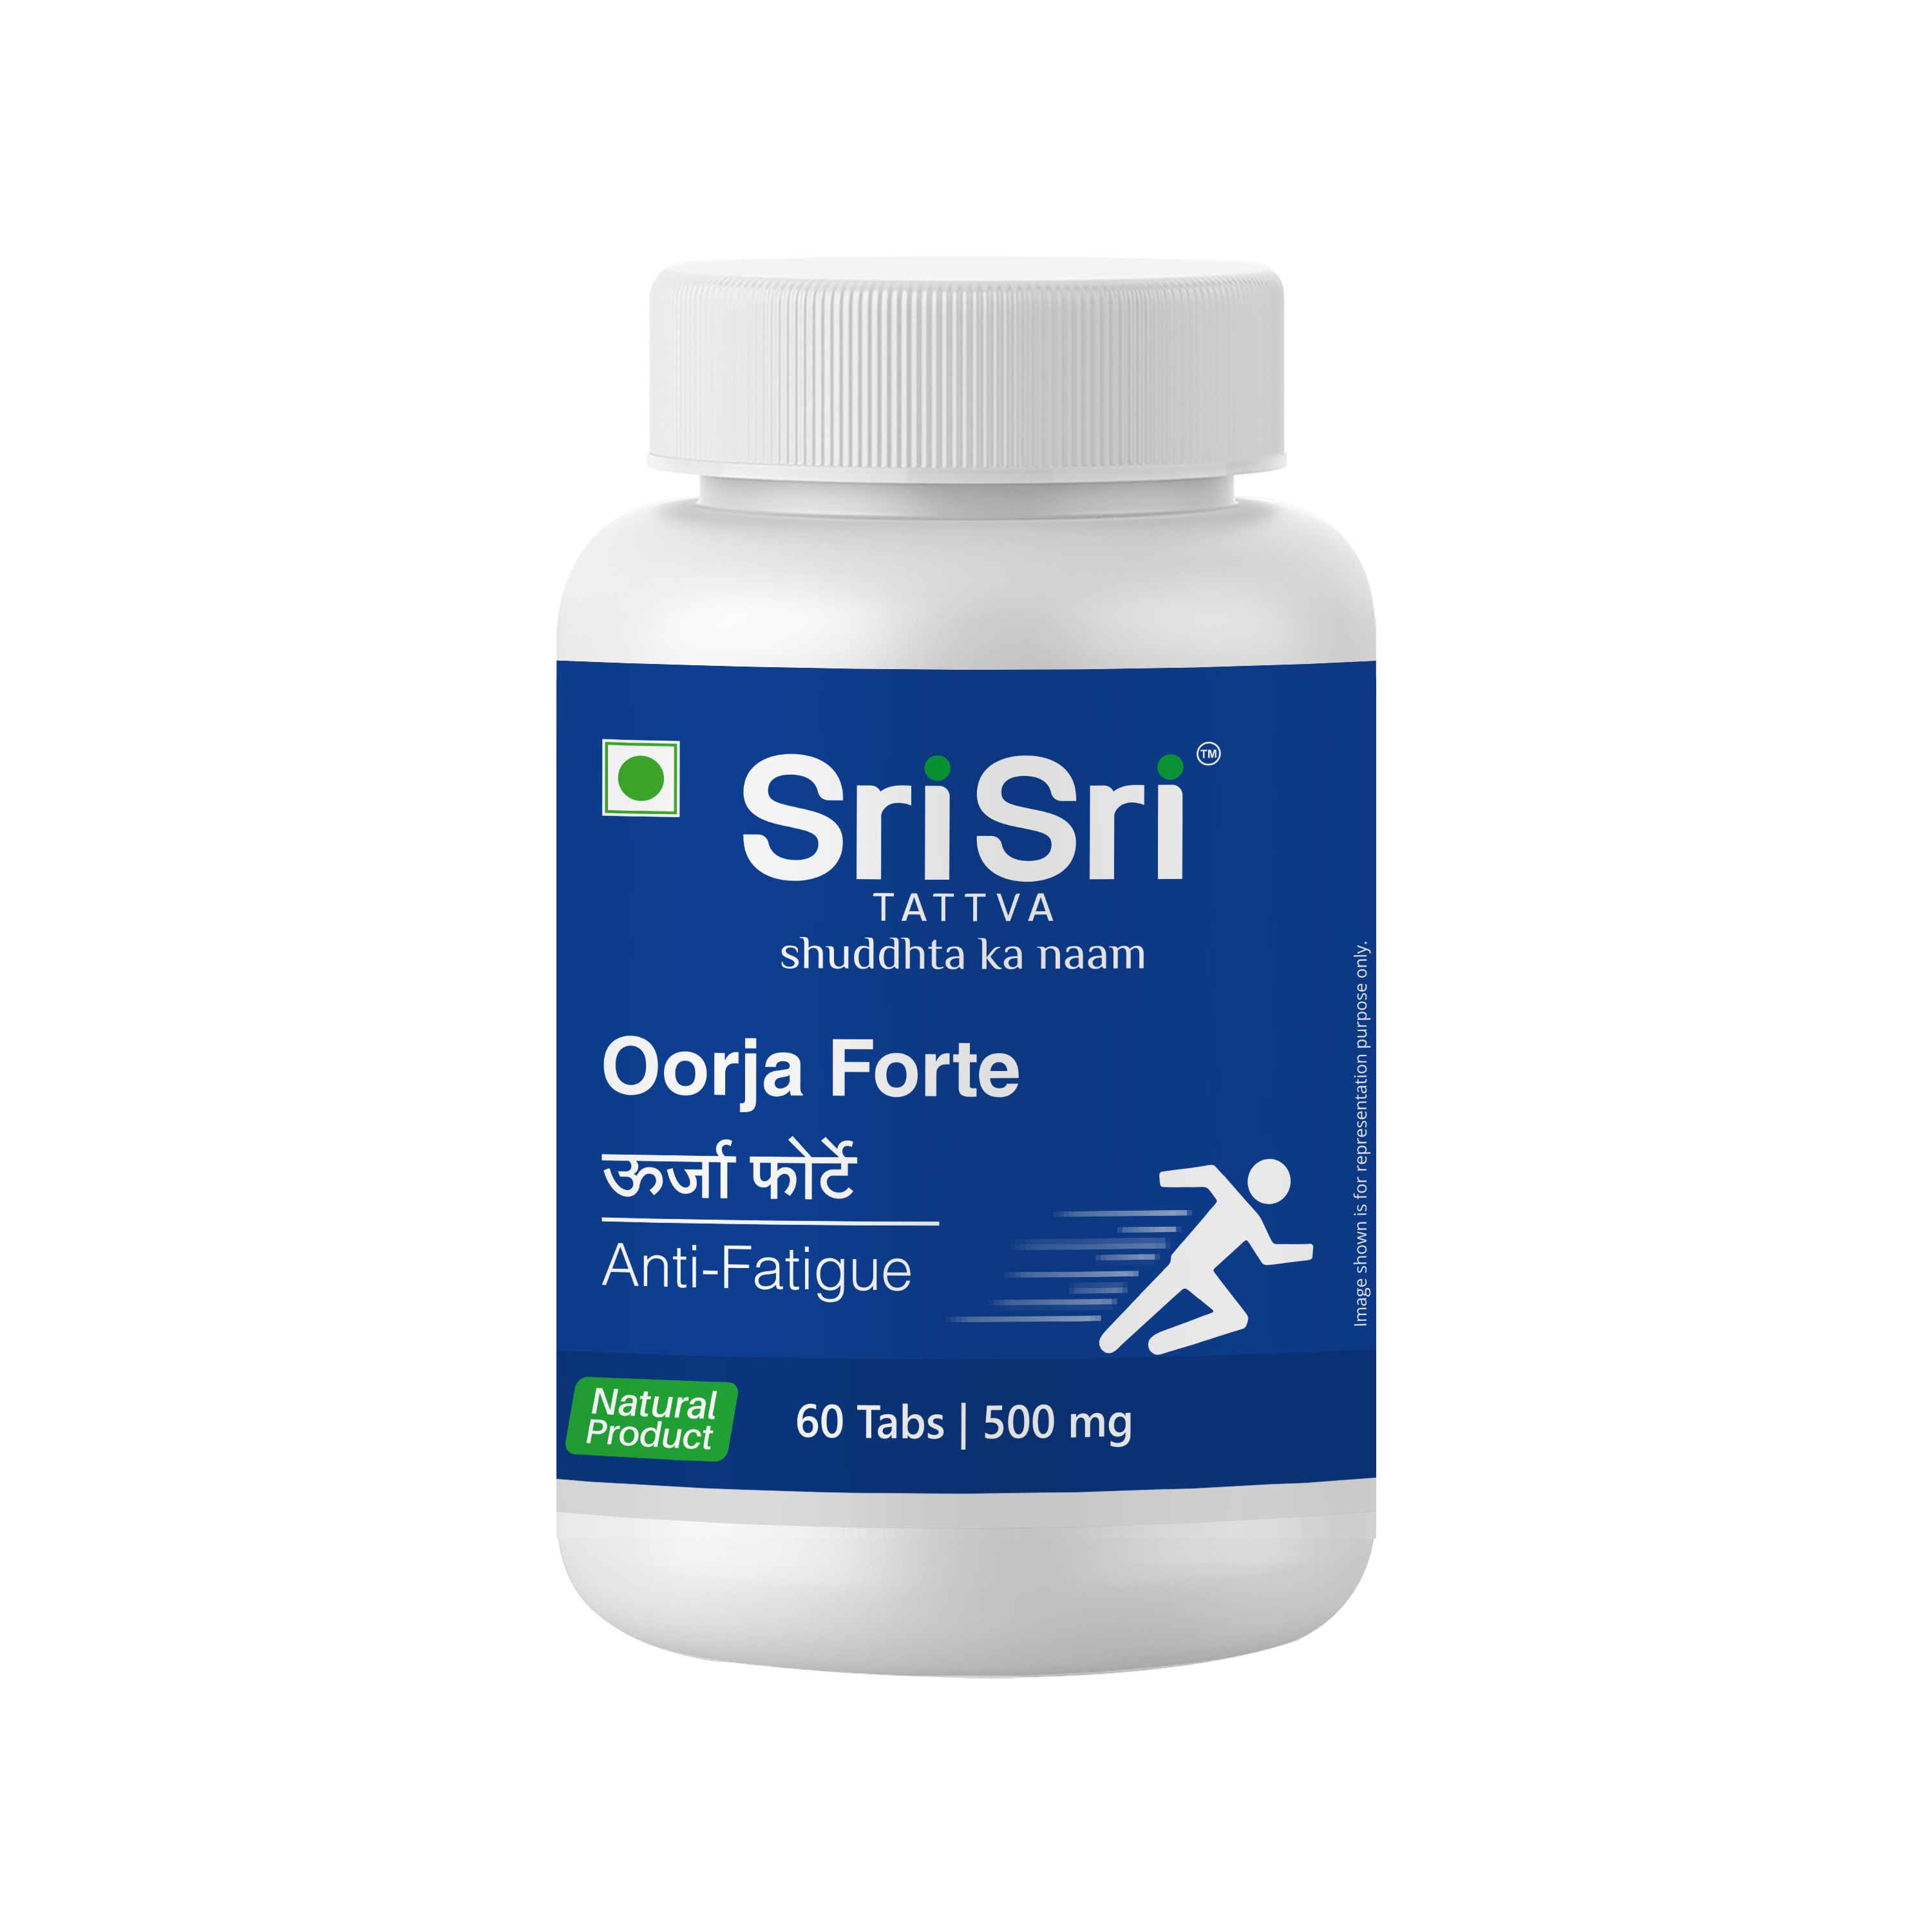 Oorja Forte | A Wonderful Blend Of Rejuvenating Ayurvedic Herbs To Improve Stamina & Relieve Fatigue | 60 Tabs, 500 mg